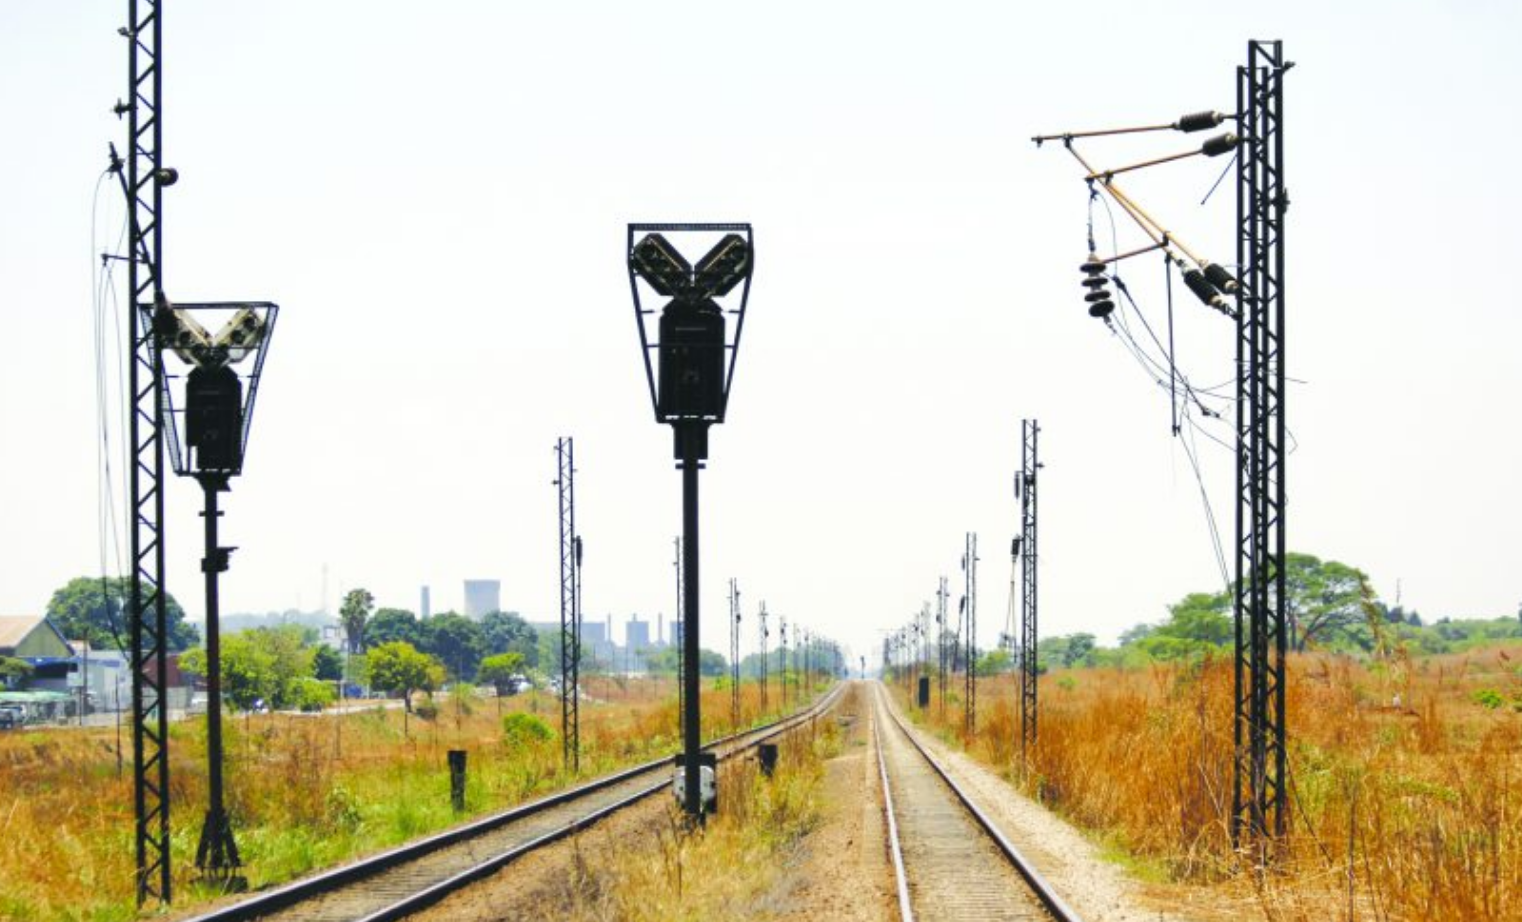 Cable fault disrupts train movement 